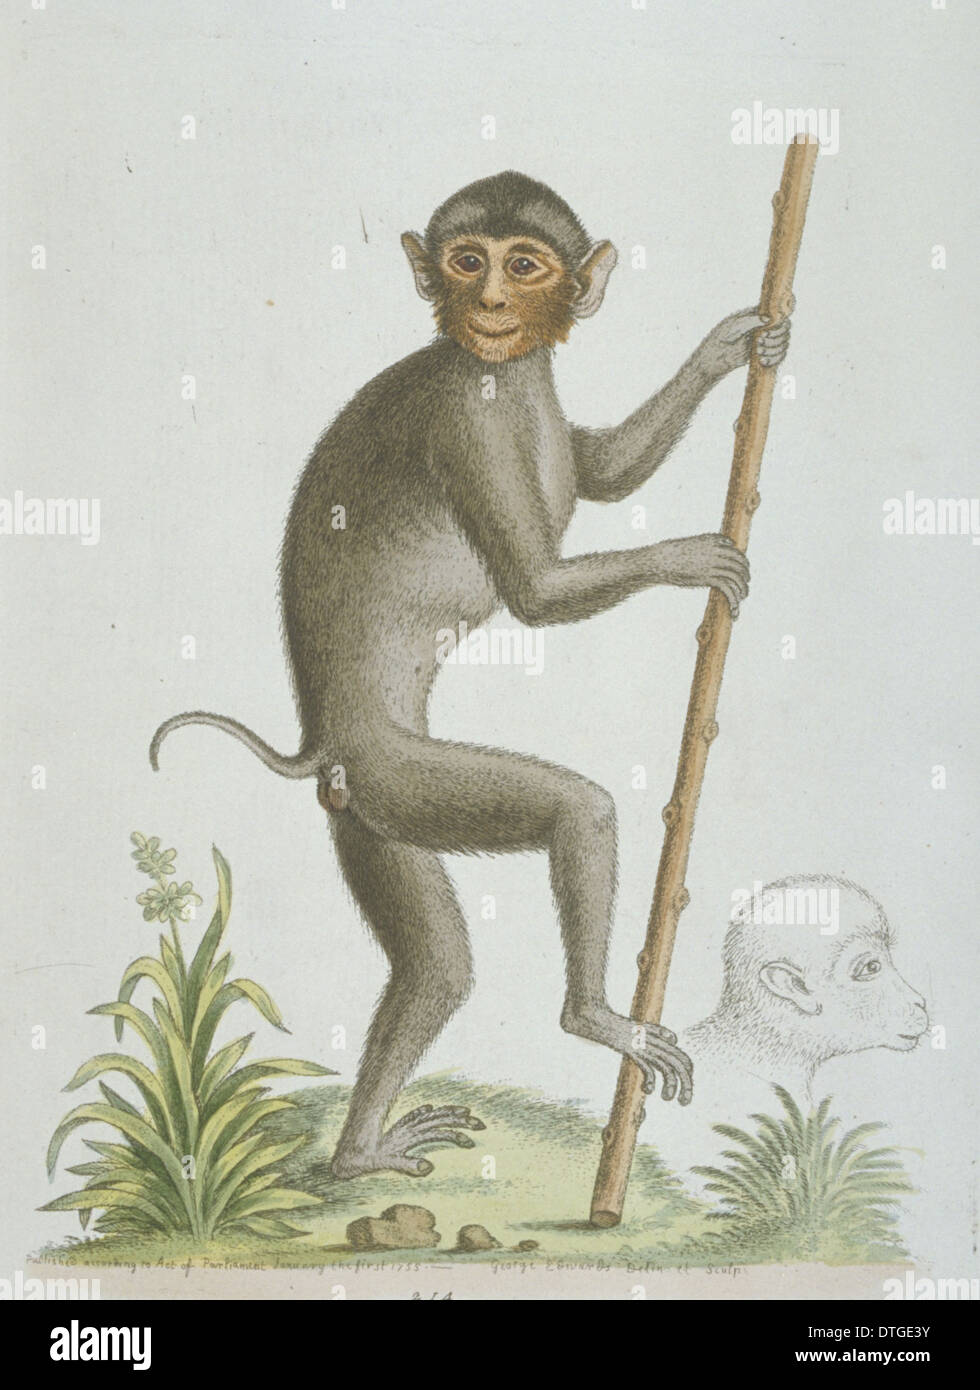 Simias sp., pig-tailed monkey from Sumatra Stock Photo